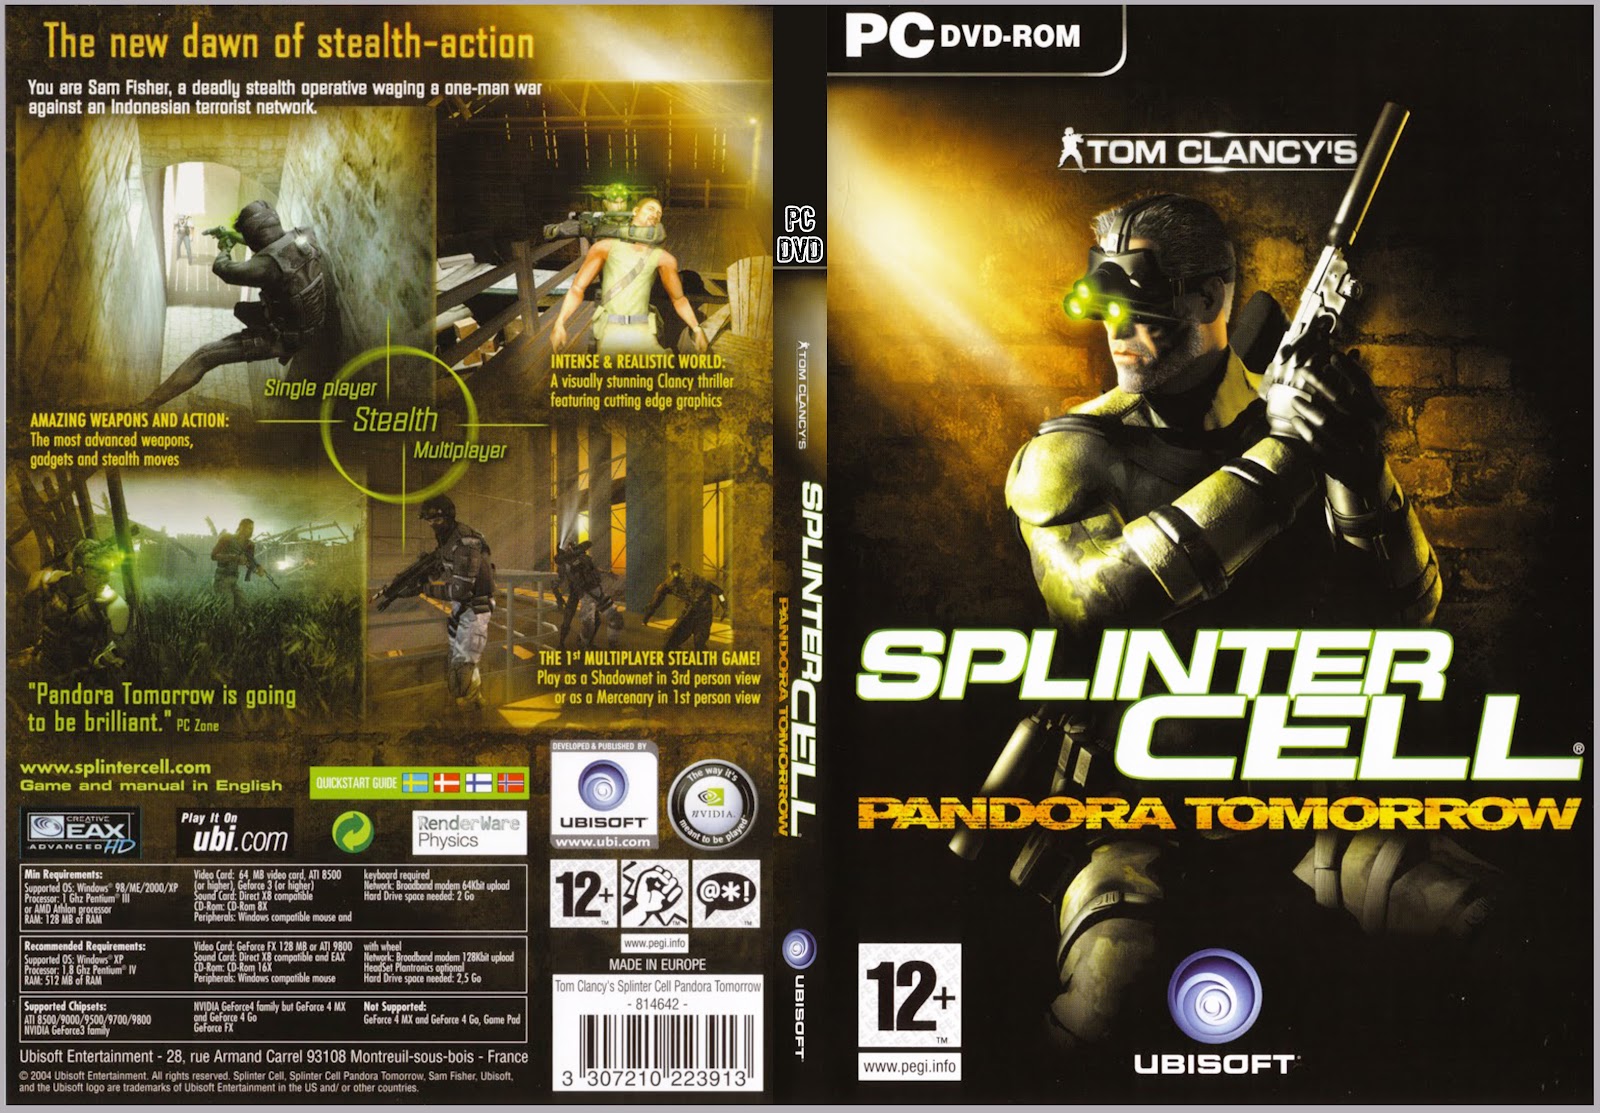 Tom clancys splinter cell pandora. Splinter Cell диск для ПК. Splinter Cell 2002 диски. Splinter Cell pandora обложка. Tom Clancy's Splinter Cell pandora tomorrow обложка.